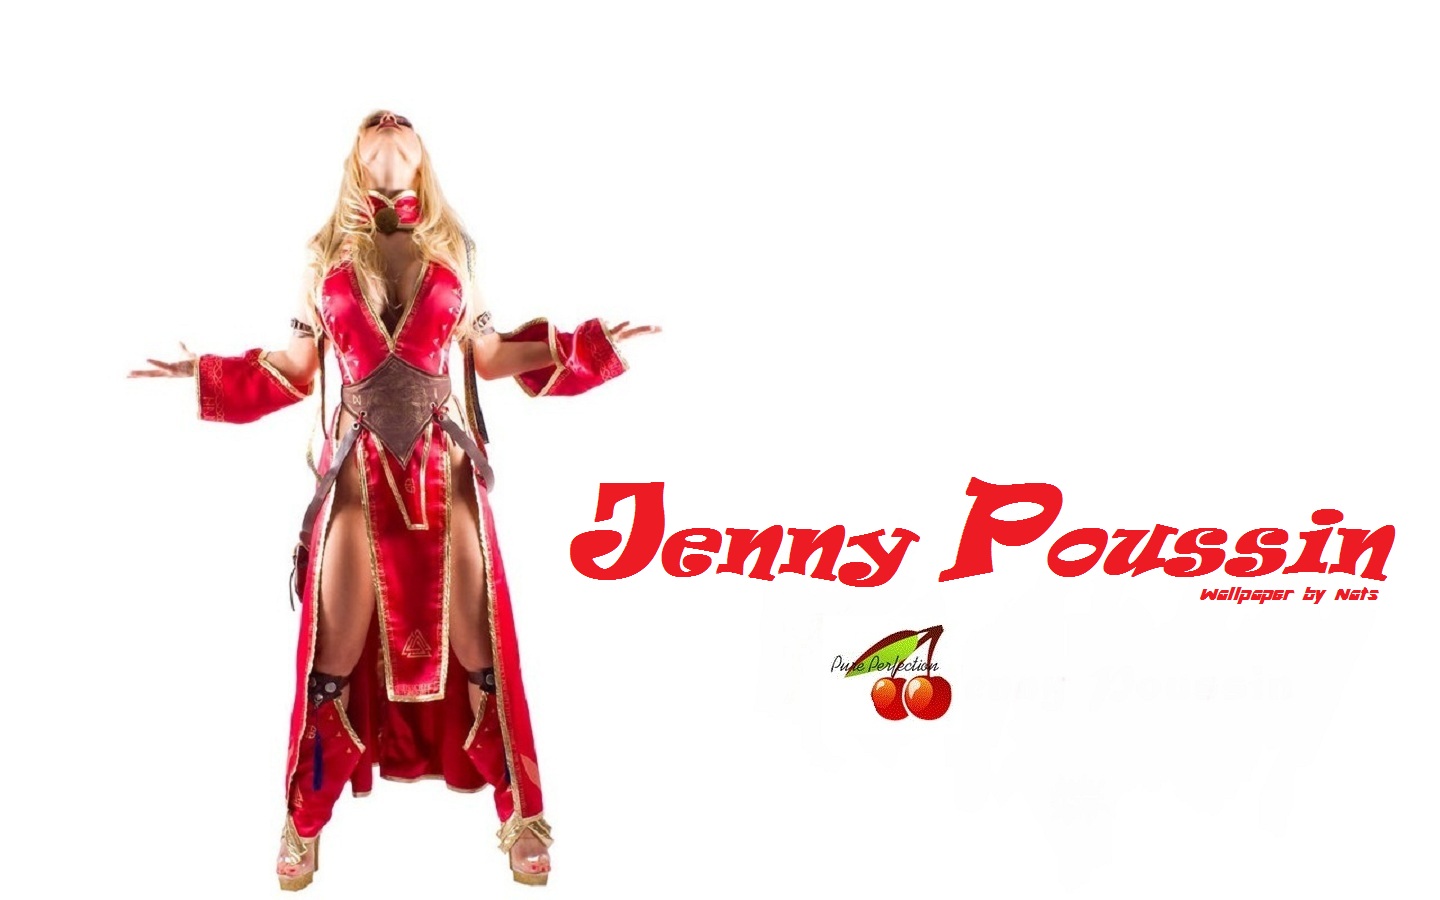 Download full size Jenny Poussin wallpaper / Celebrities Female / 1440x900